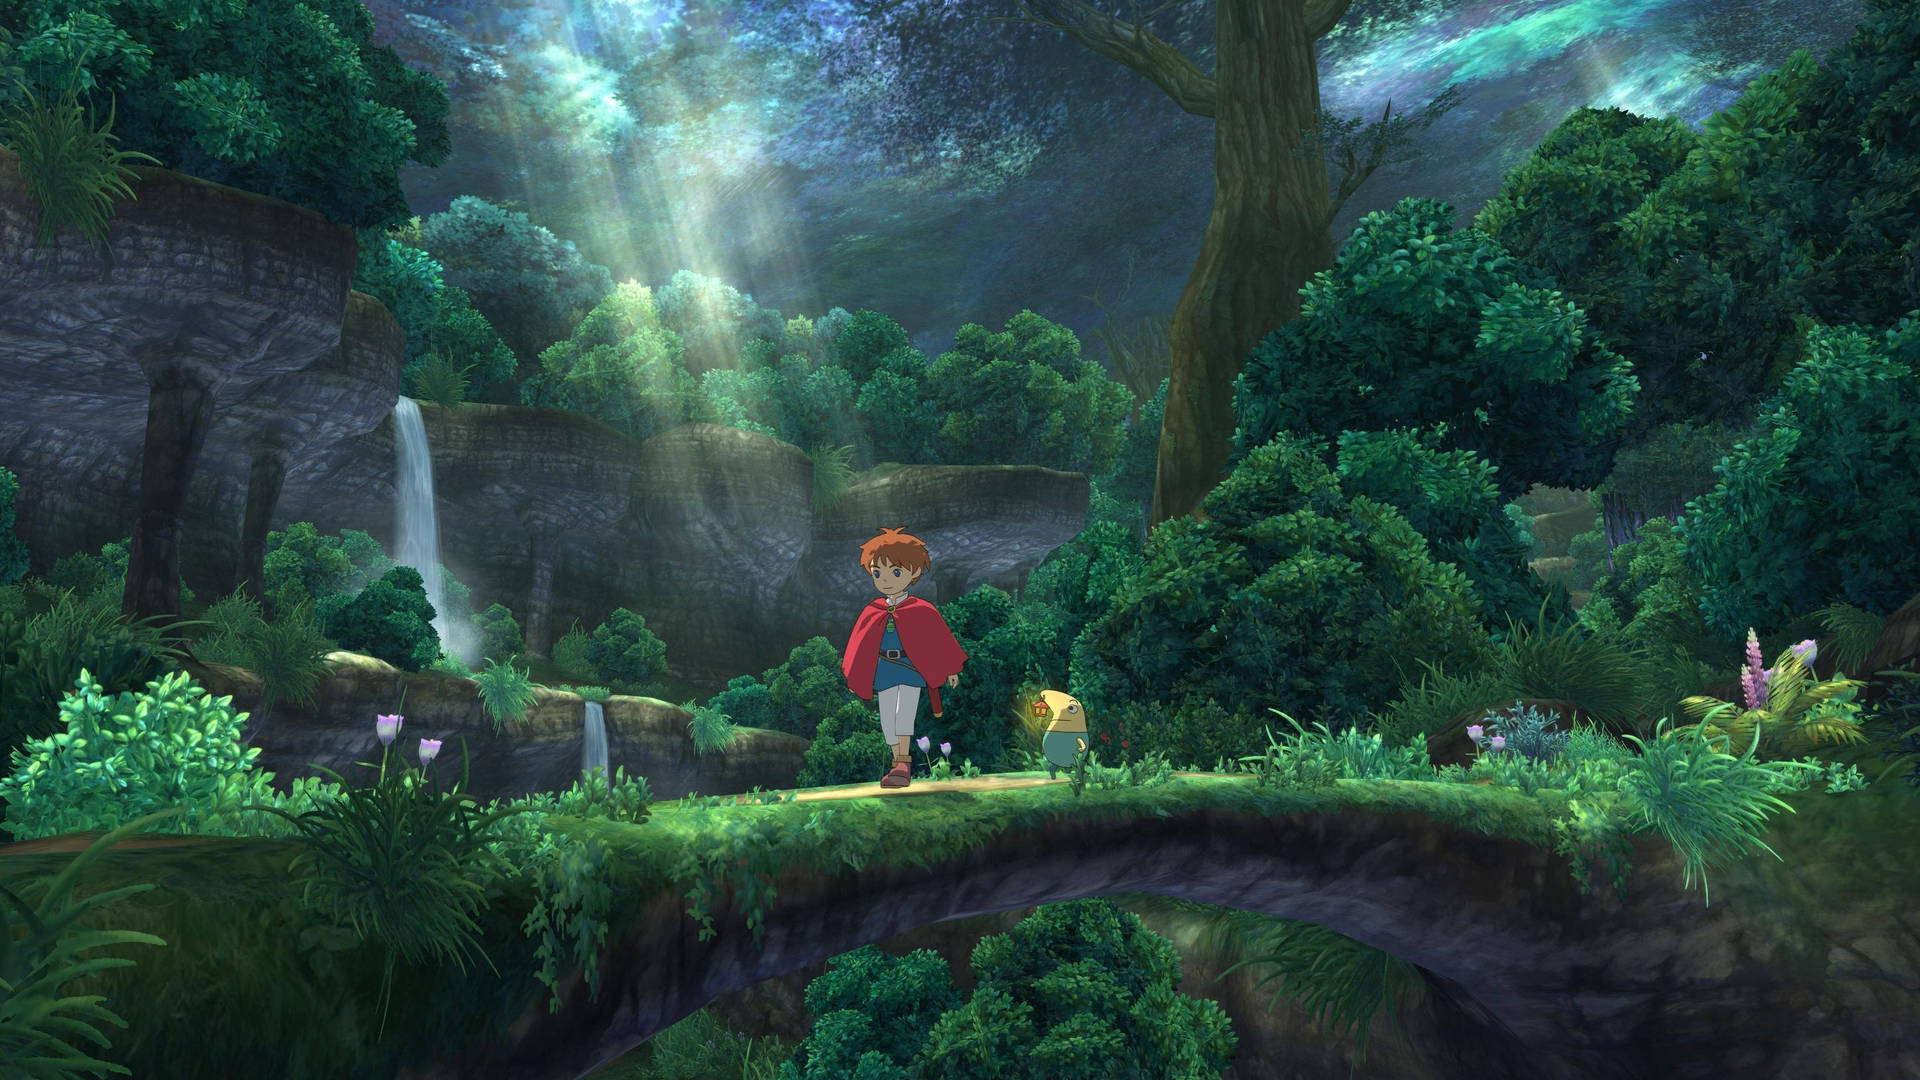 Studio Ghibli Scenery Wallpaper for FREE